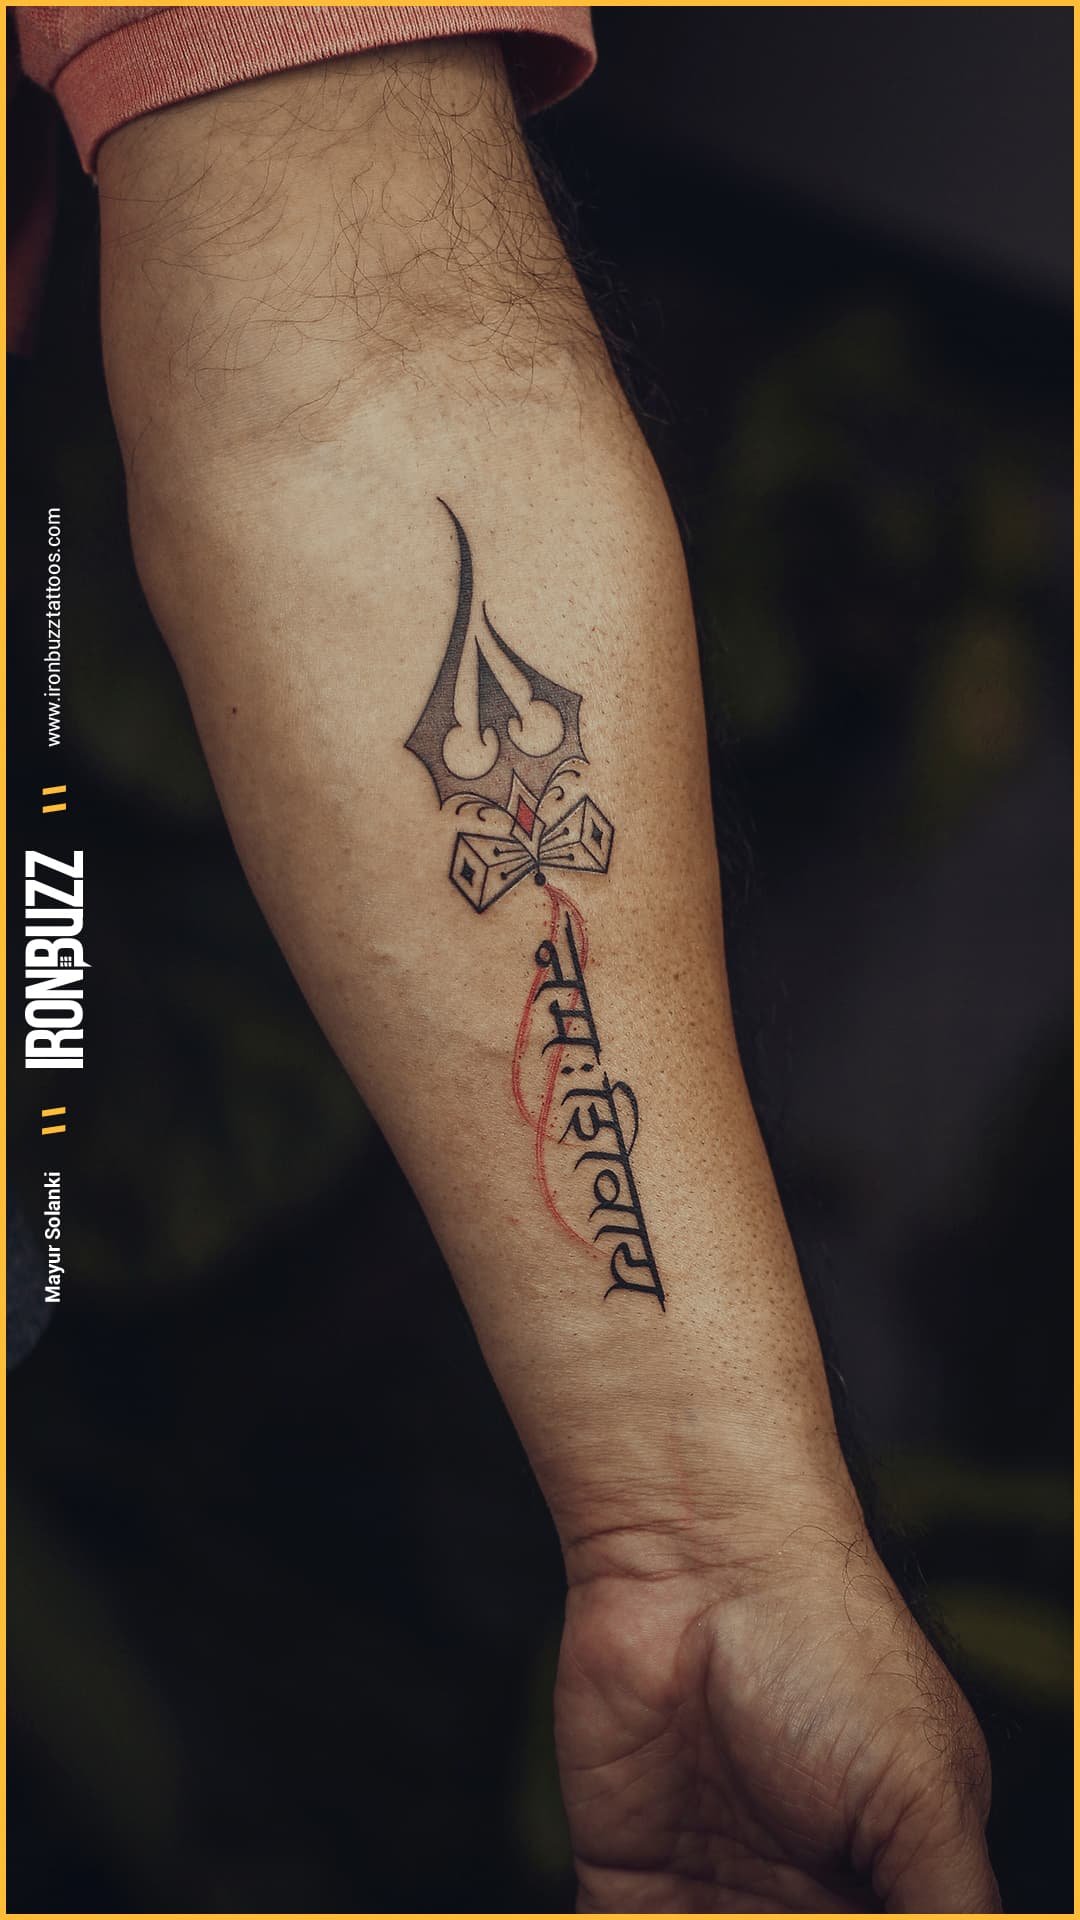 Jazzink tattoos & piercing studio For appointment = 9540311509 Delhi, Mayur  vihar phase-1 #tattoo #tattoos #tattooist #tattooed… | Instagram